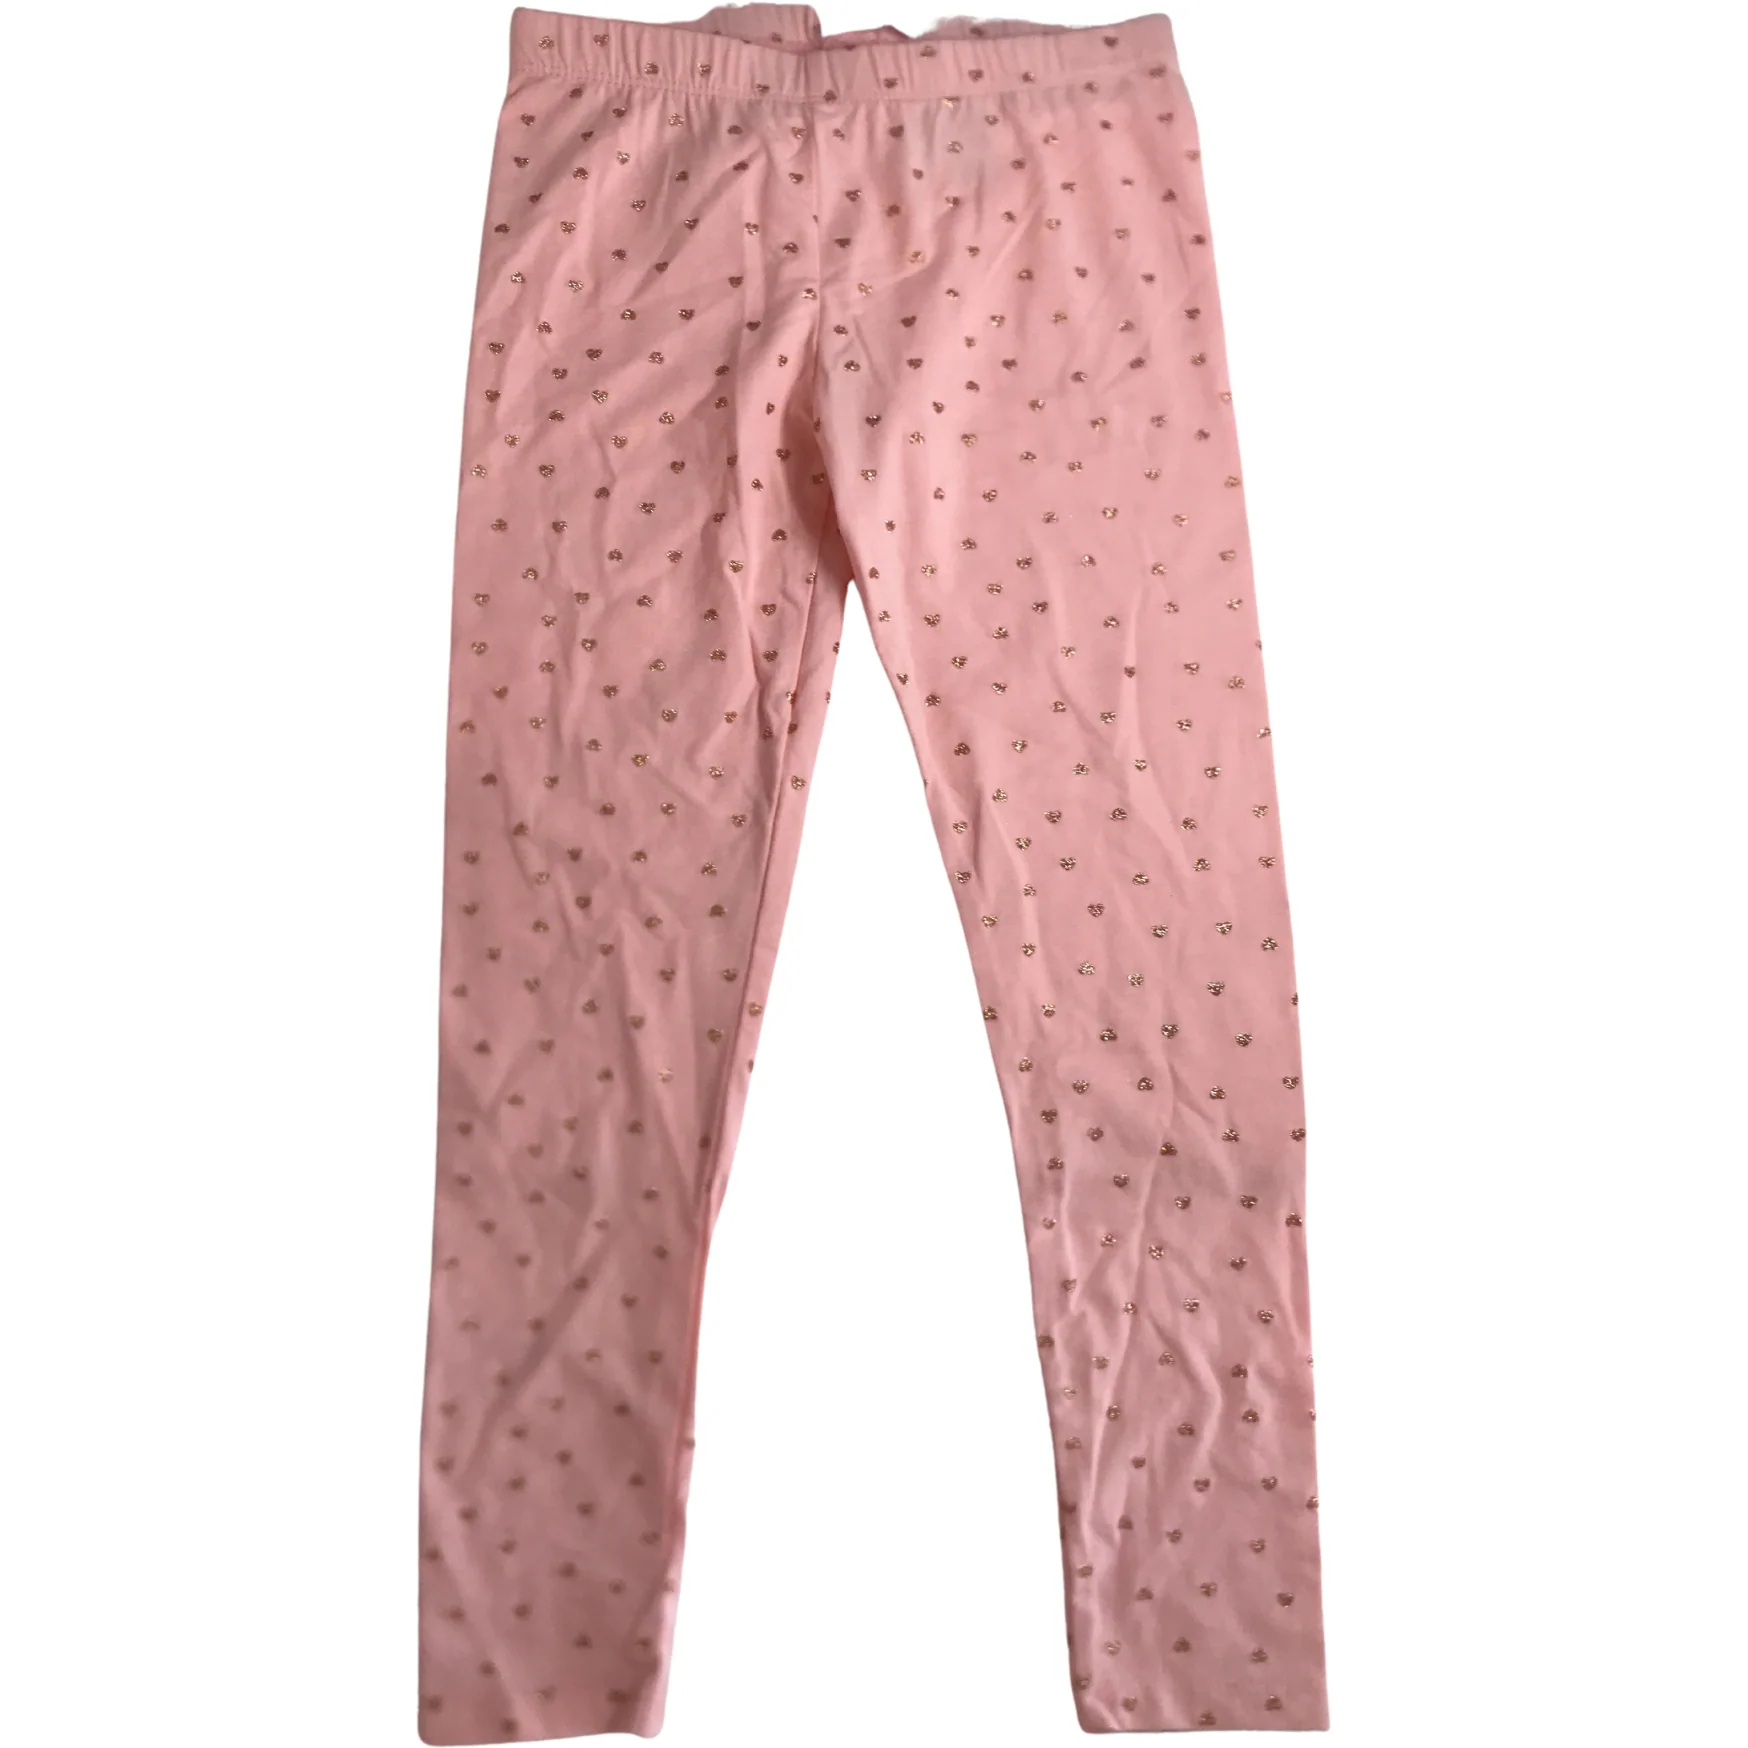 Epic Threads Girl's Leggings: Heart Design / Pink & Gold / Size 6X